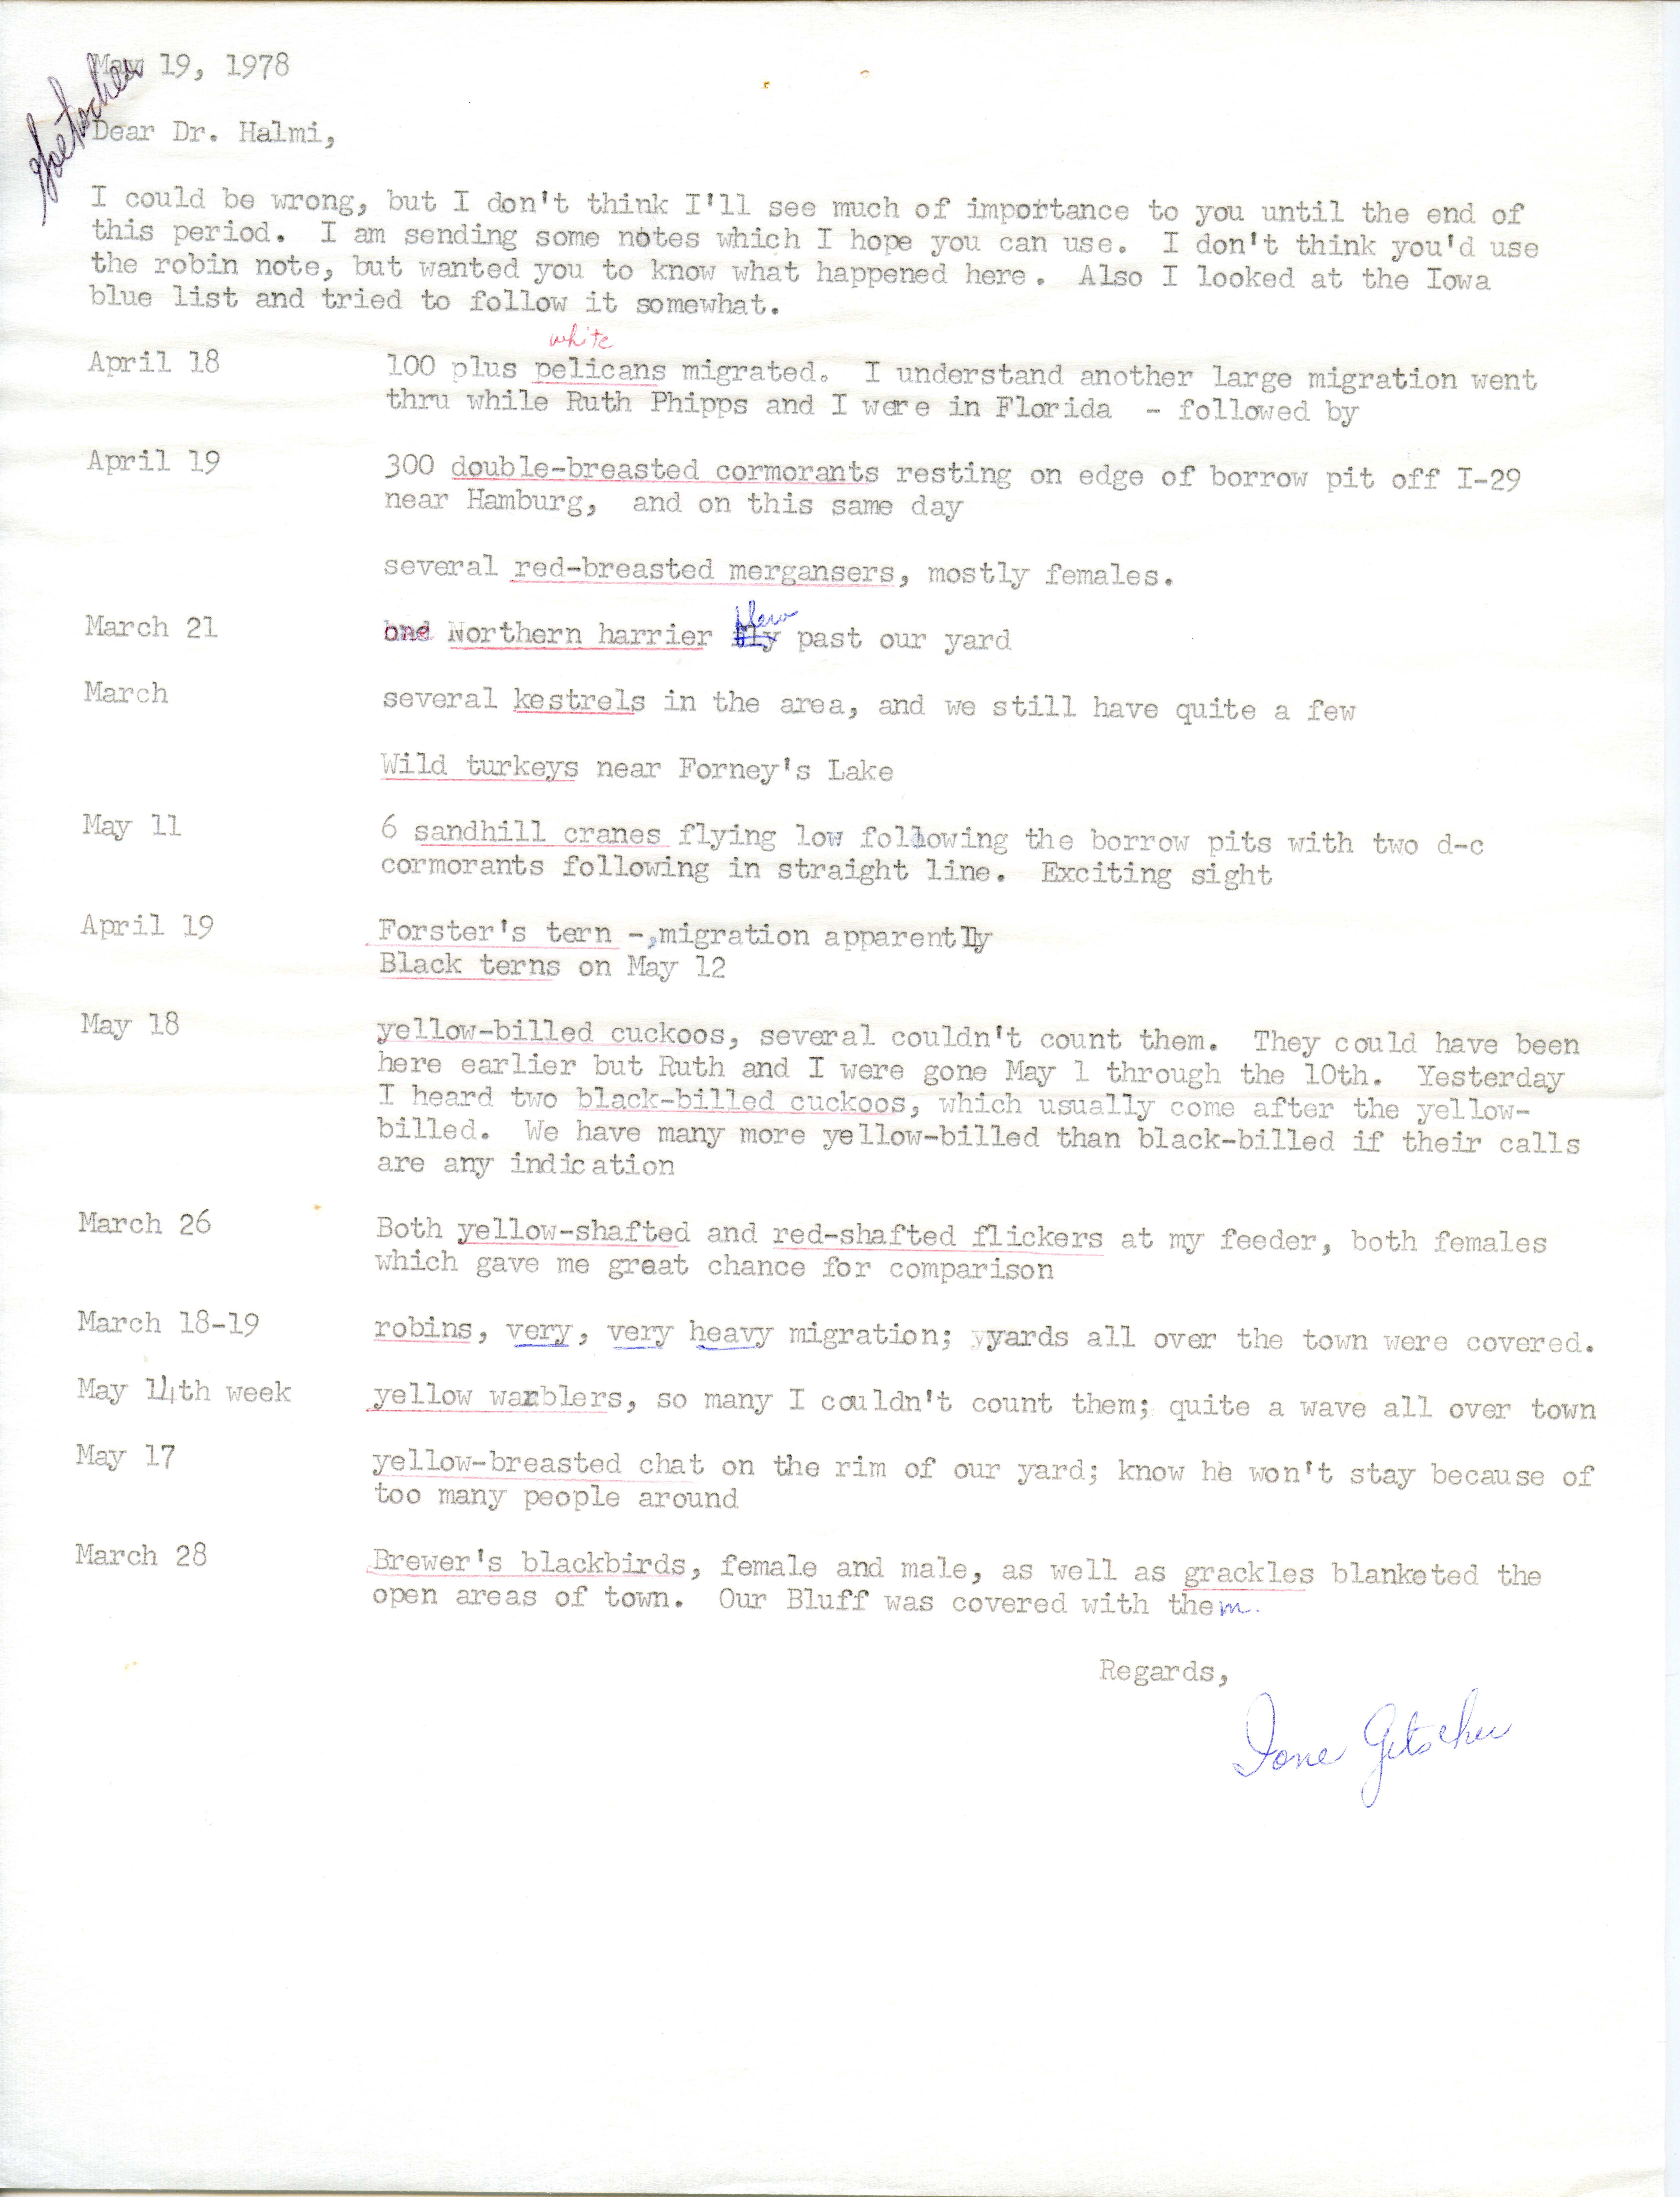 Ione Getscher letter to Nicholas S. Halmi regarding bird sightings, May 19, 1978 